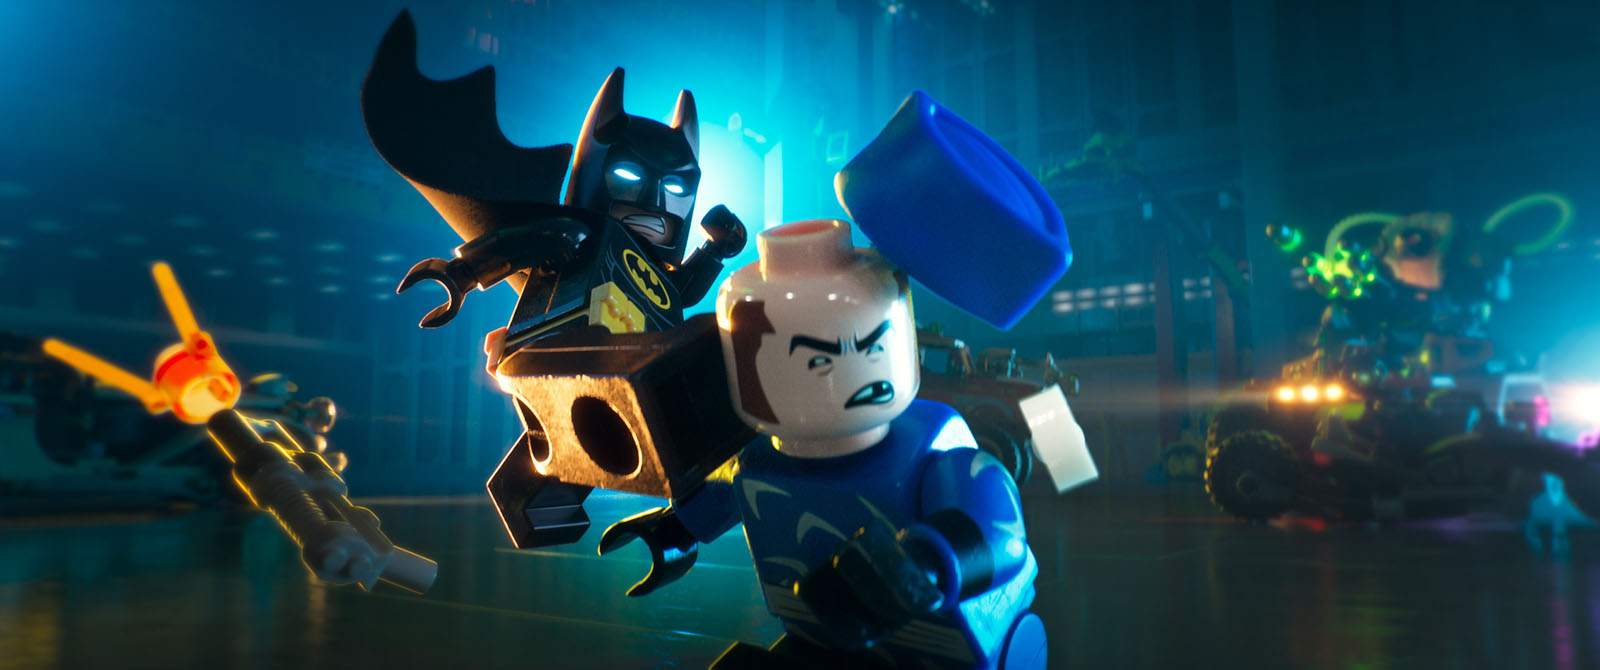 LEGO Batman O Filme-16Agosto2016-3